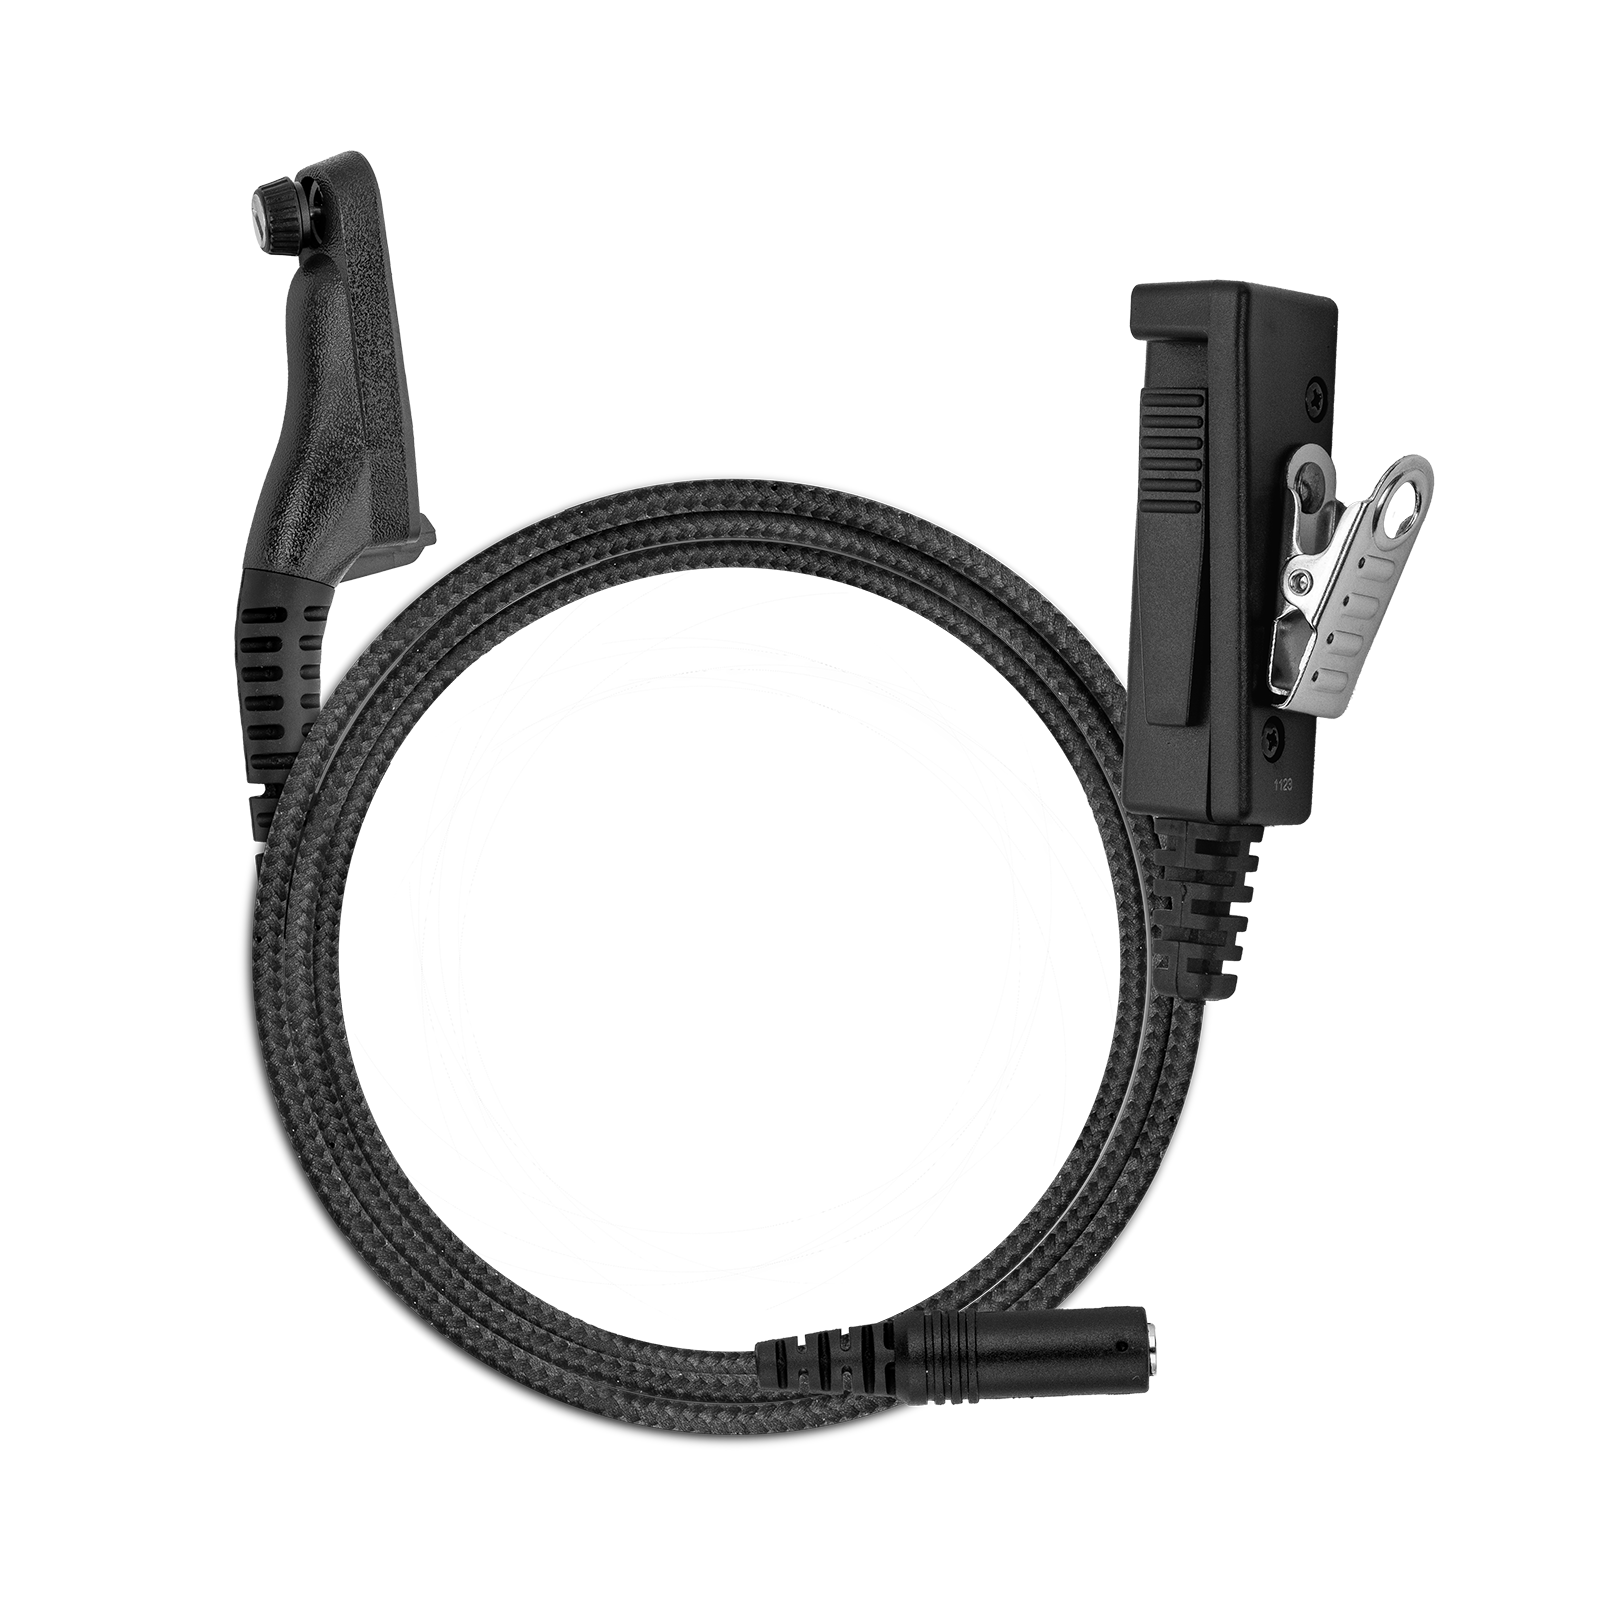 N-ear: 360™ Flexo Dynamic 2-Wire Surveillance Kit